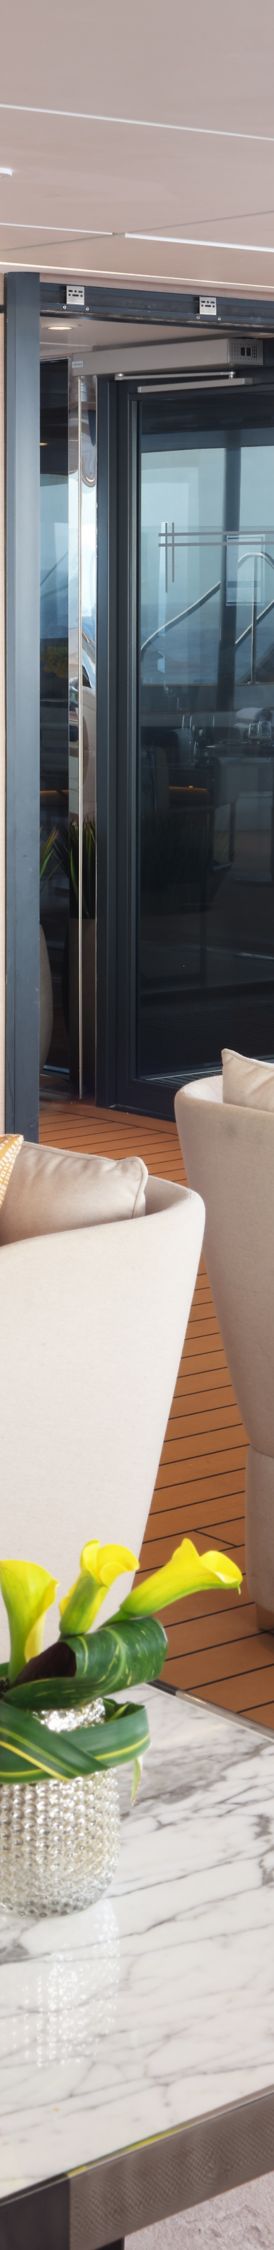 Ritz Carlton Yacht Collection - Luxury Yacht Suite Design 